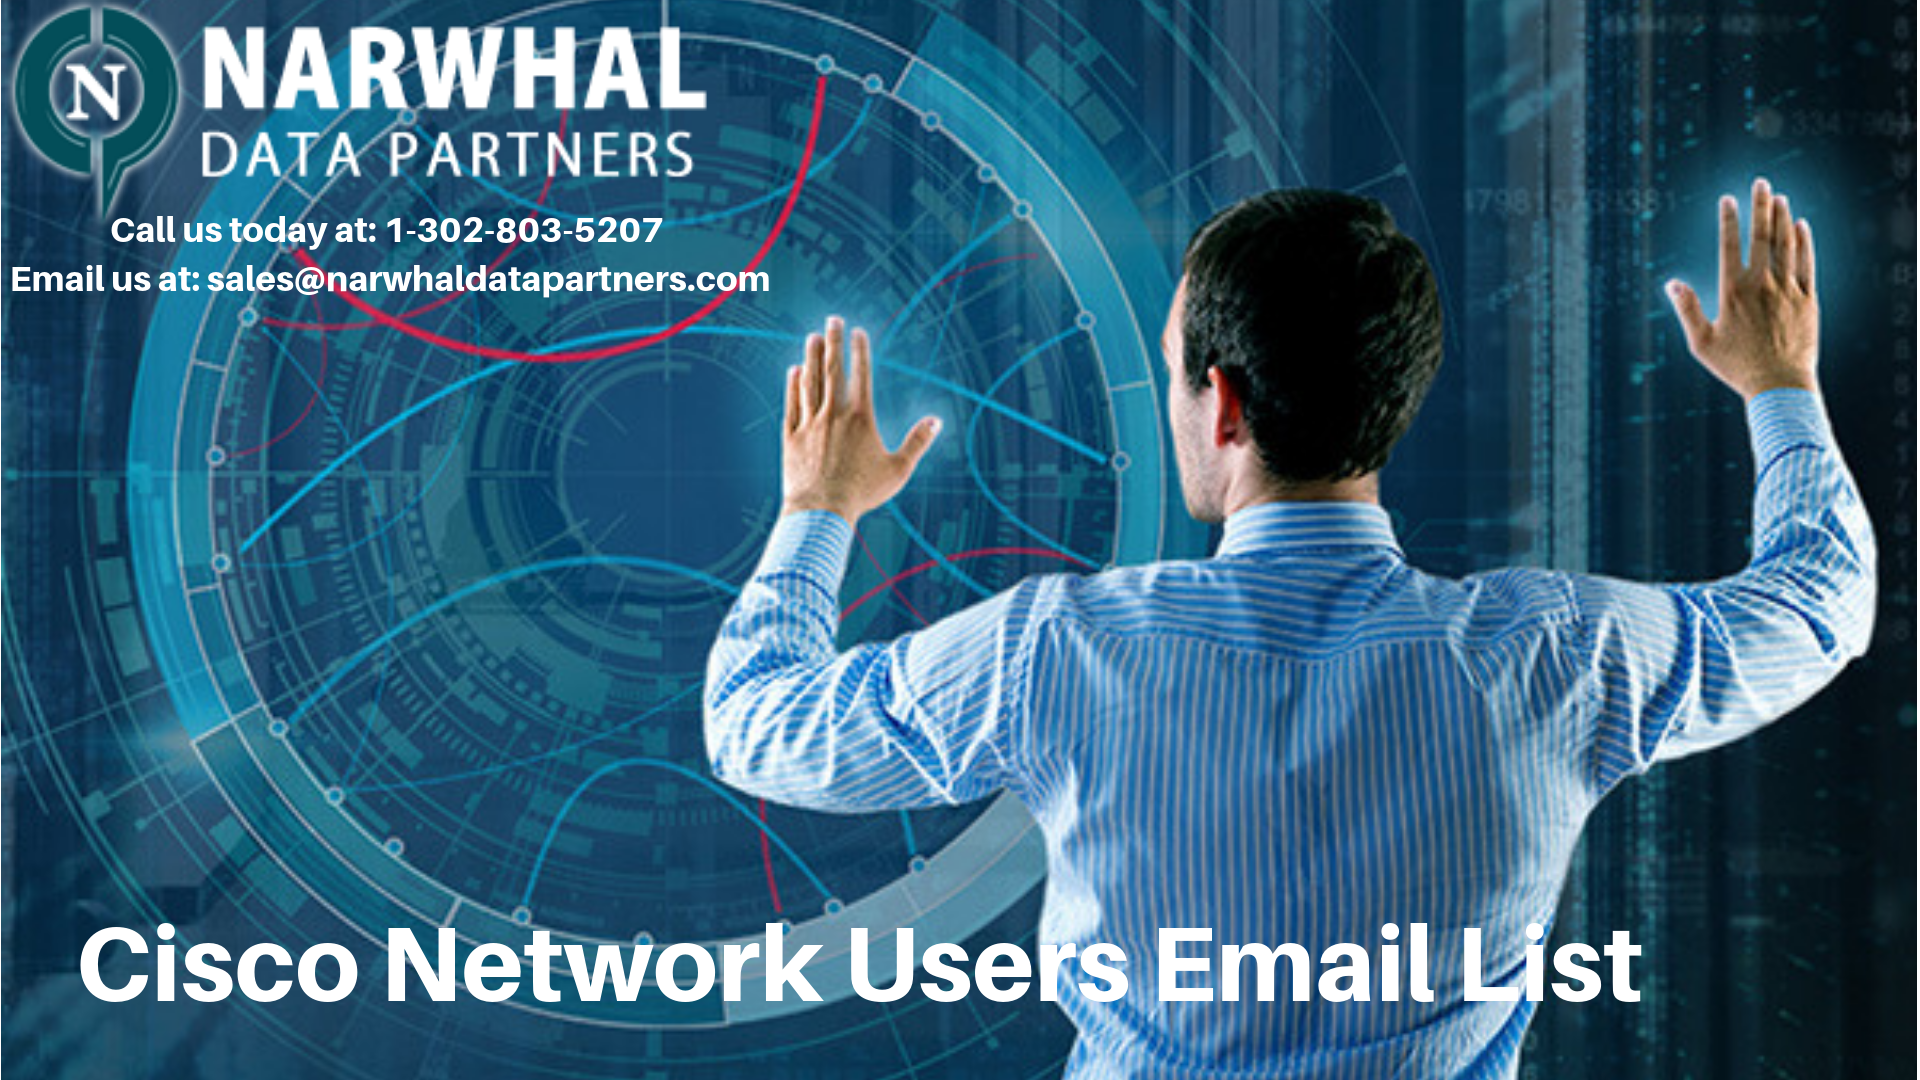 http://narwhaldatapartners.com/cisco-network-users-email-list.html